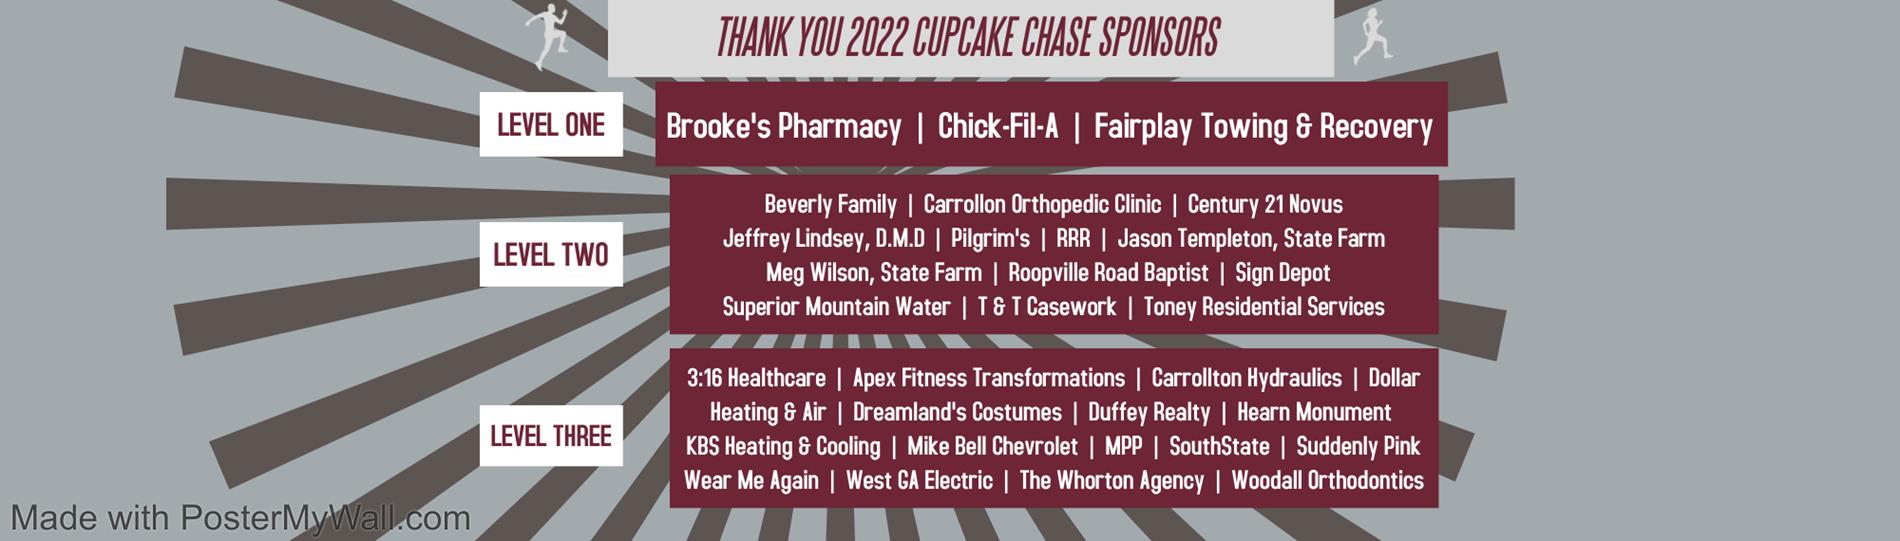 cupcake chase sponsors